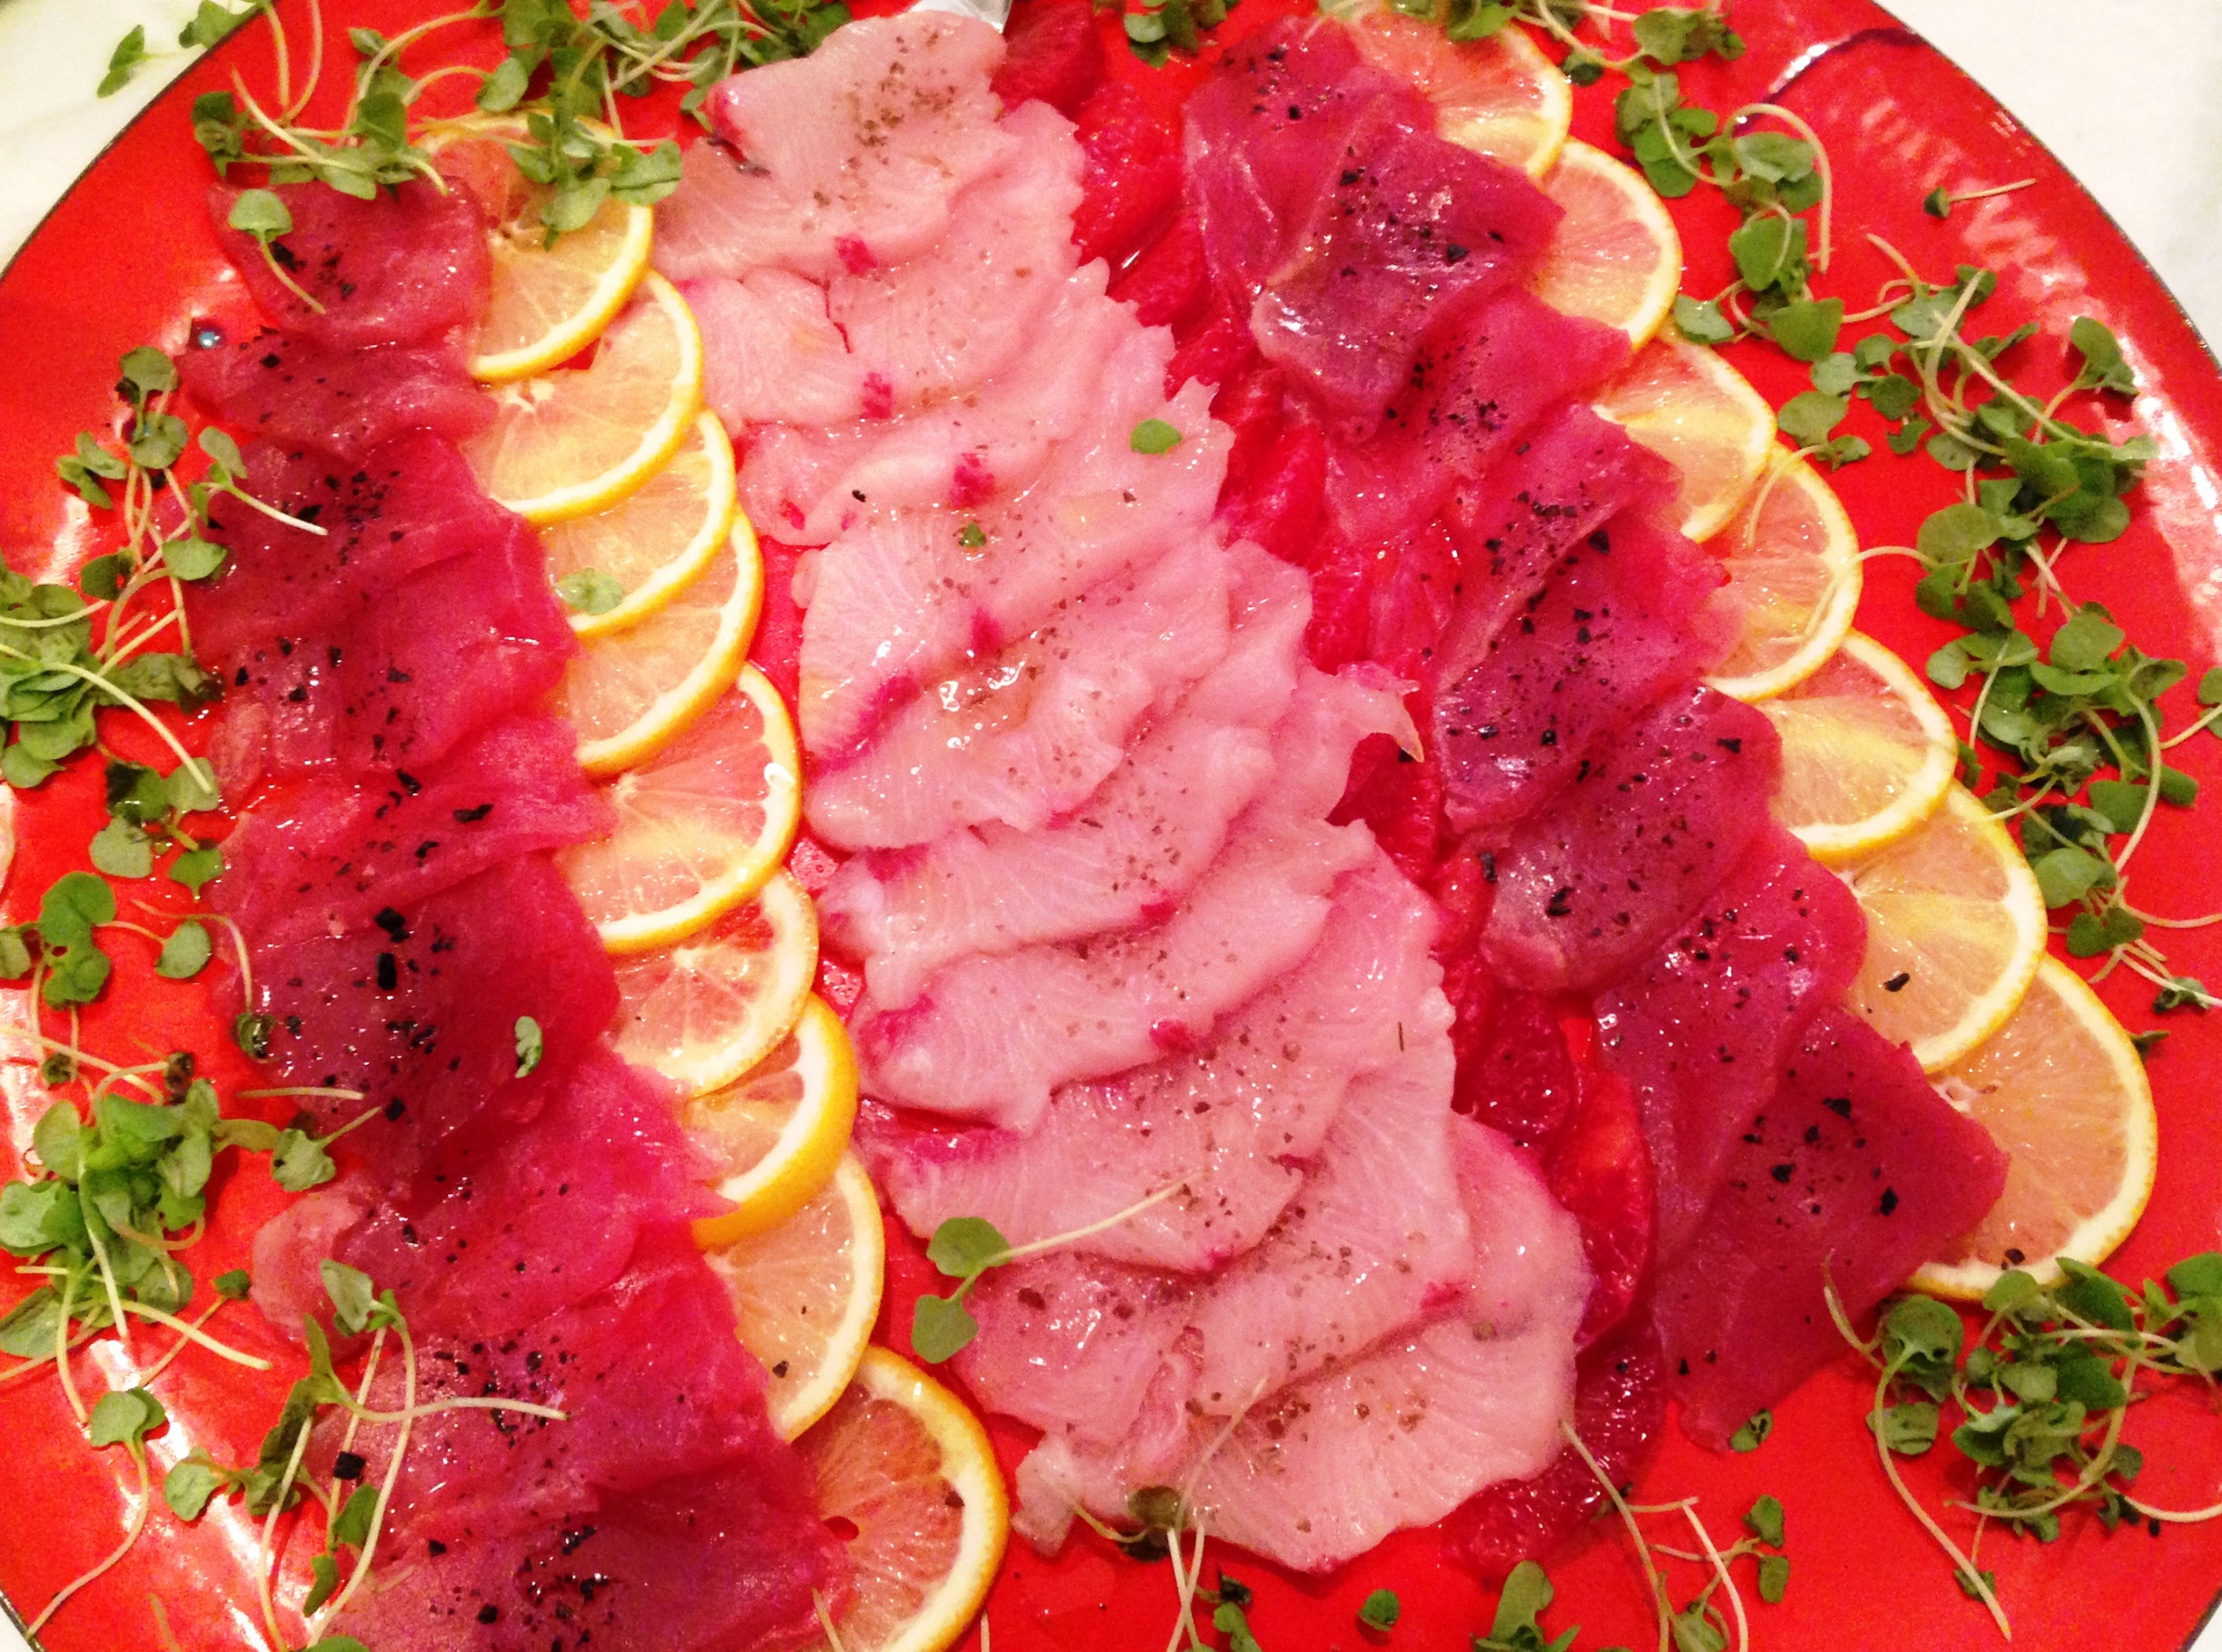 Tuna sashimi with truffled salt & hamachi sashimi with smoked salt